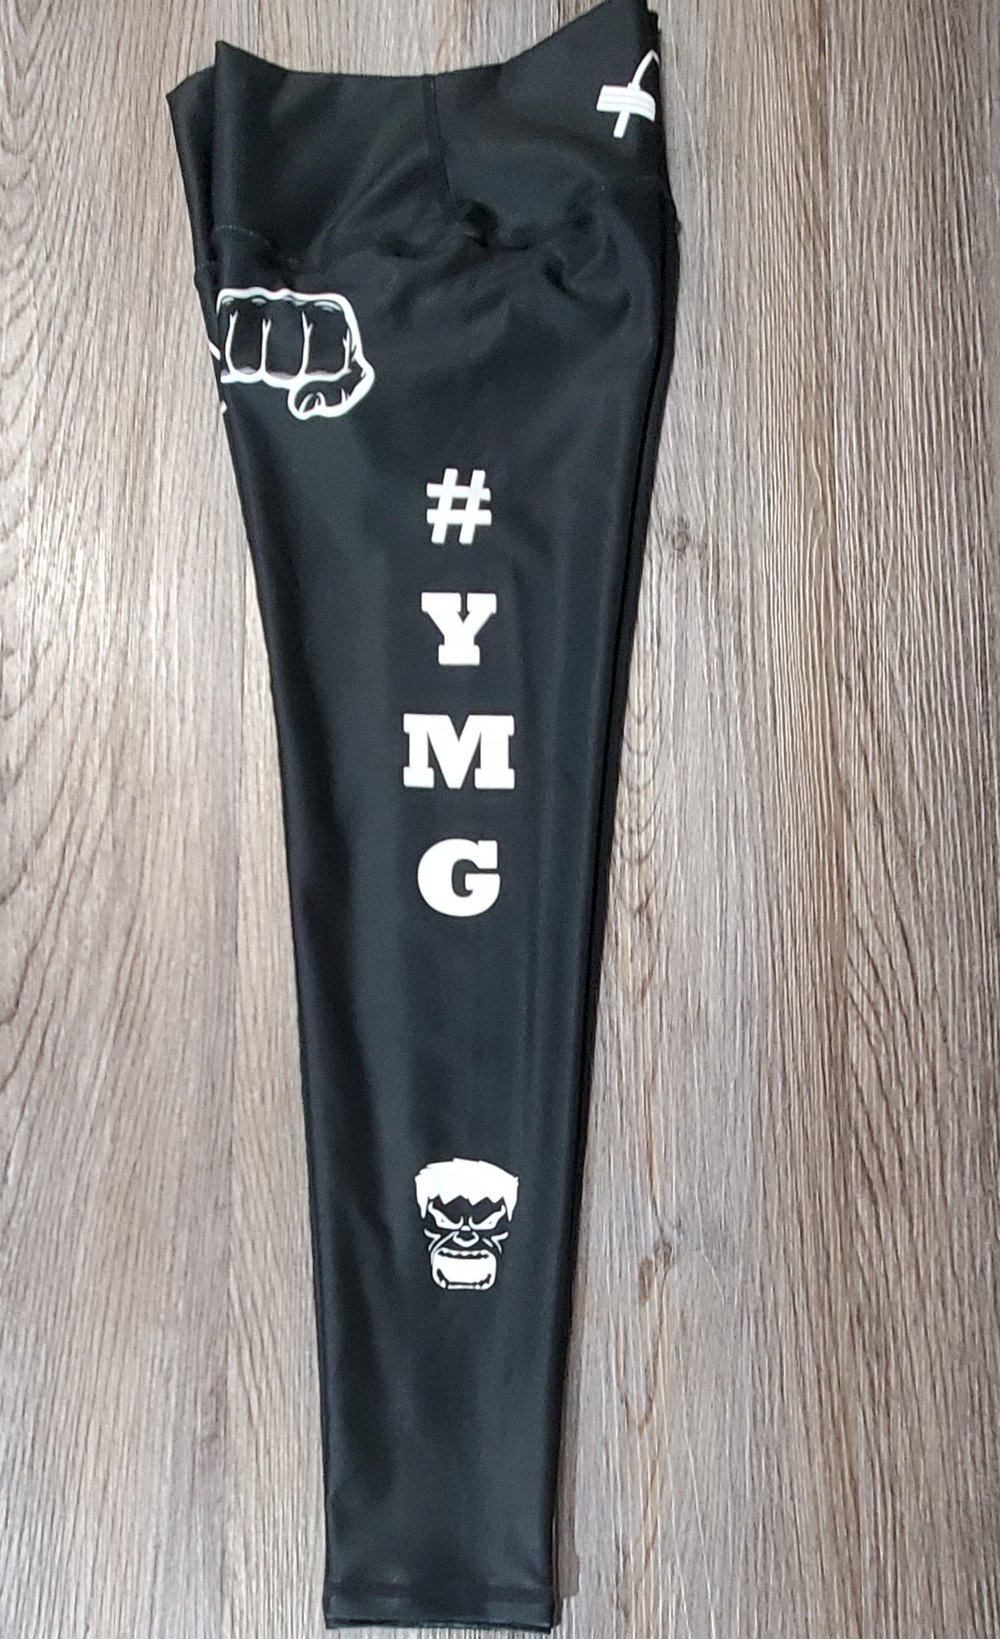 Womens leggings- You're My Goal (#YMG)